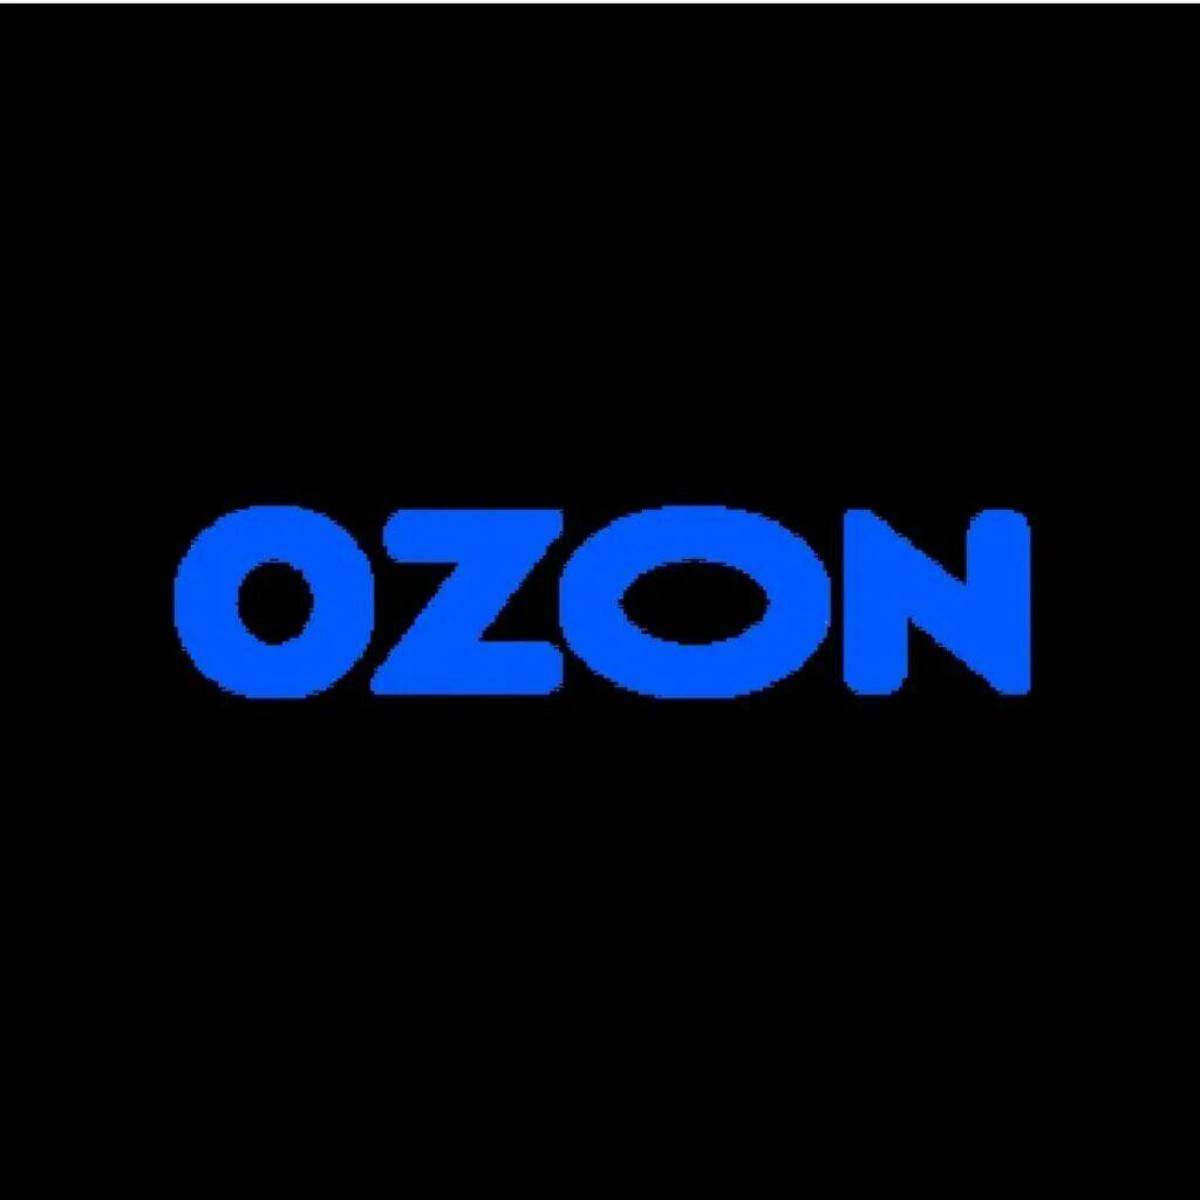 Озон интернет магазин красный. OZON. OZON логотип. Логотип Озон на черном фоне.